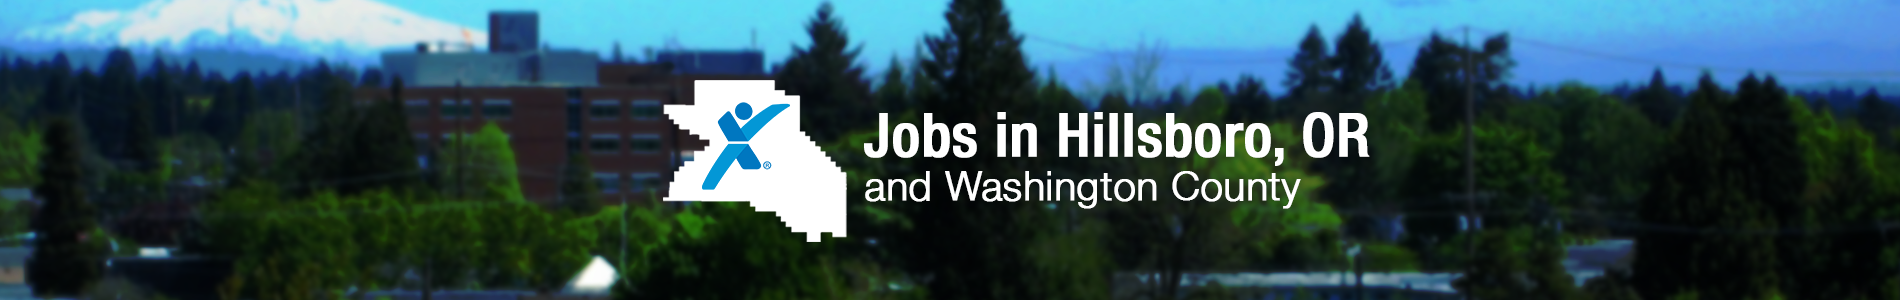 Jobs in Hillsboro, OR - Apply today!